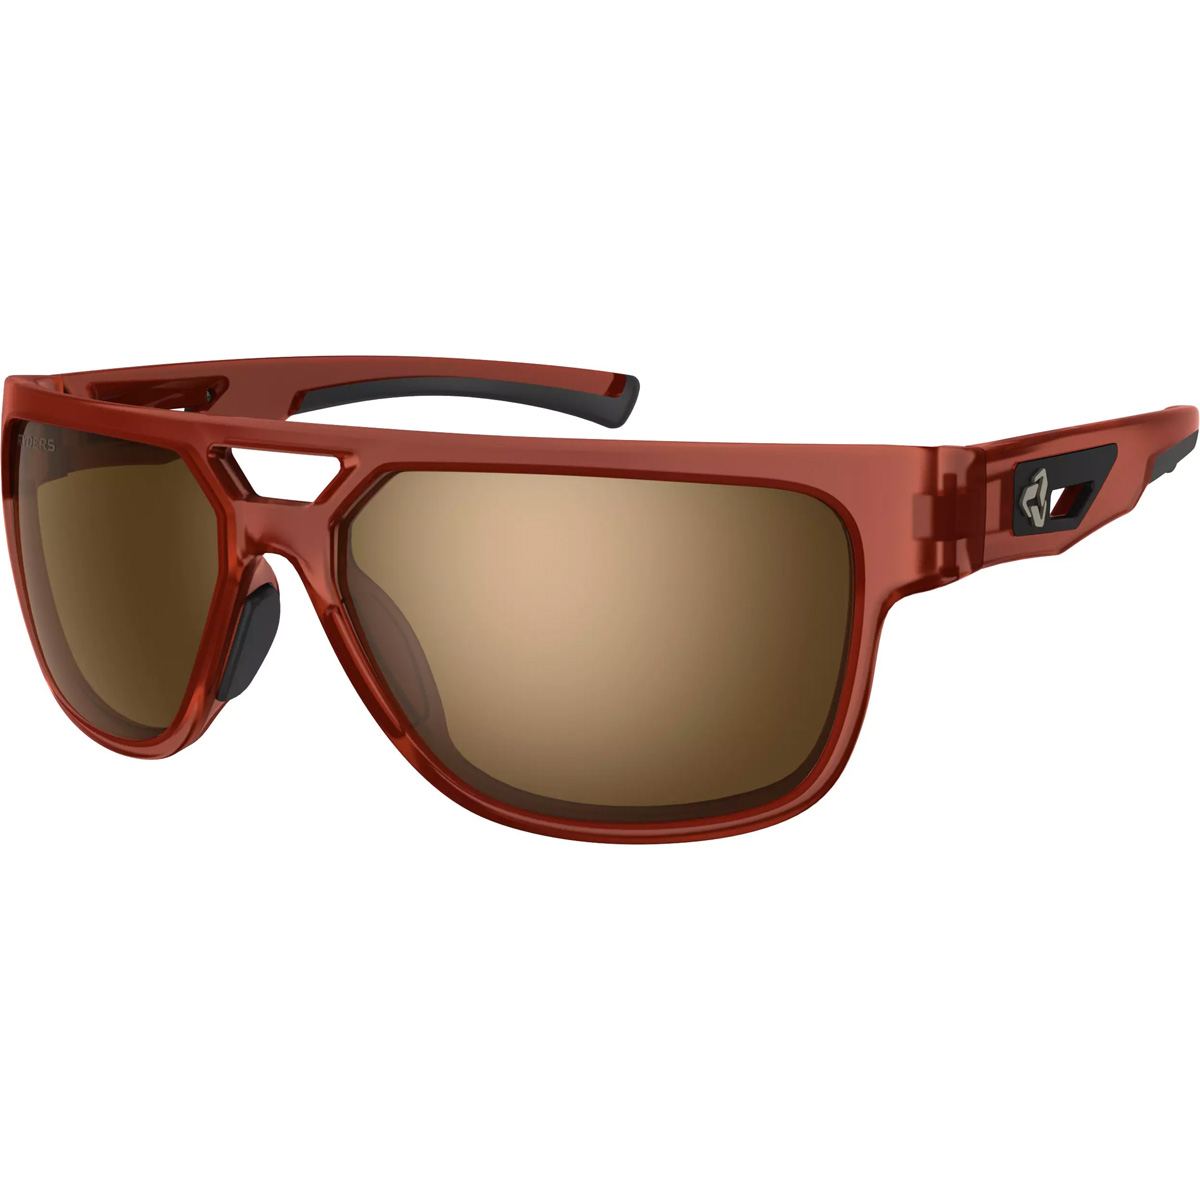 Ryders Eyewear Cakewalk Polarized Sunglasses (DK RED / BROWN LENS SILVER FM) - image 1 of 1